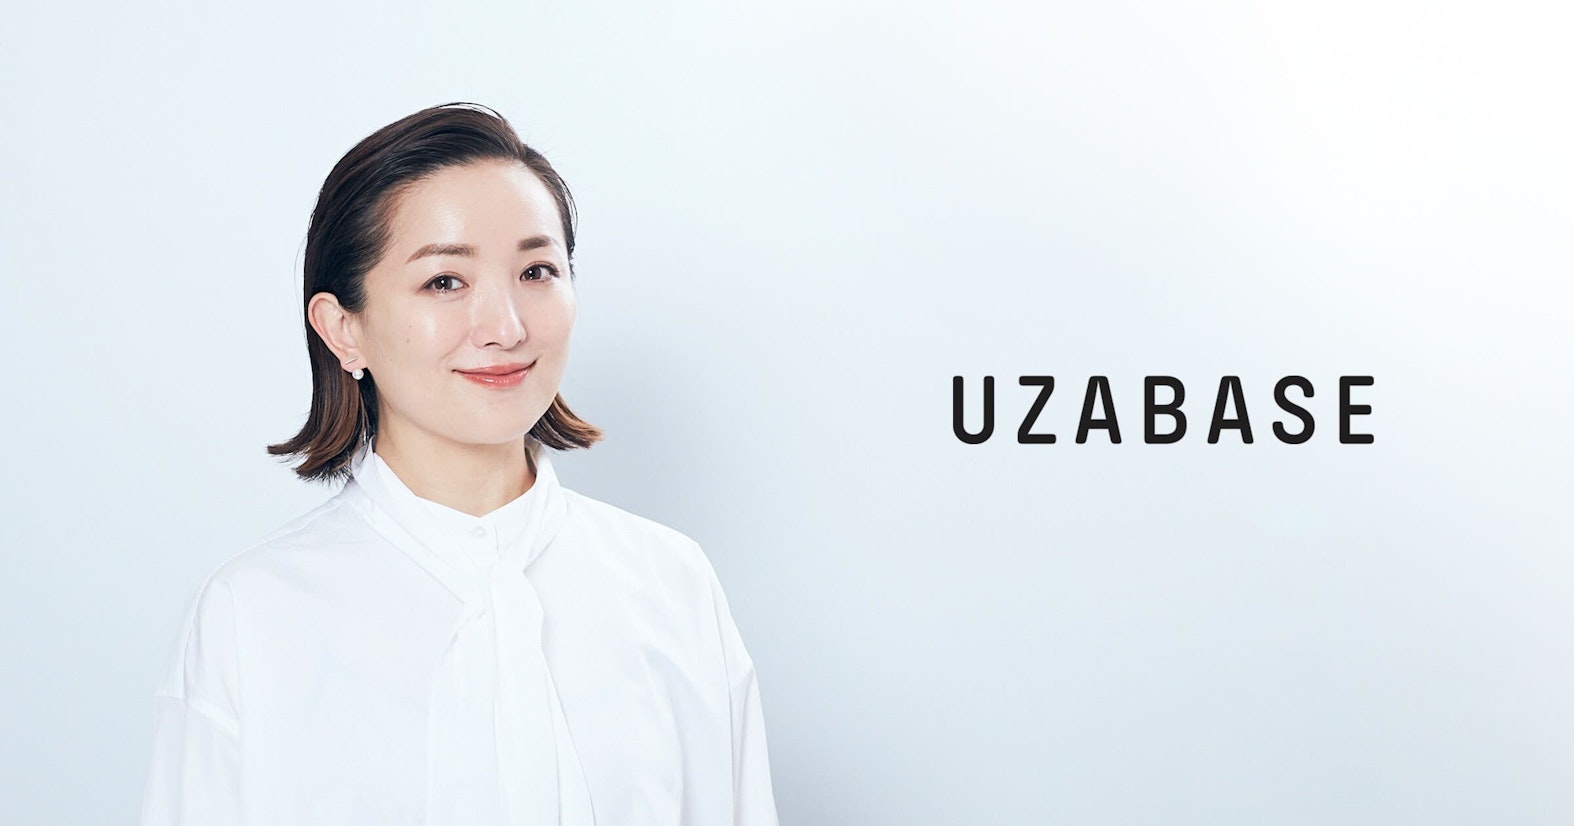 Uzabase Appoints Saki Igawa as External Director